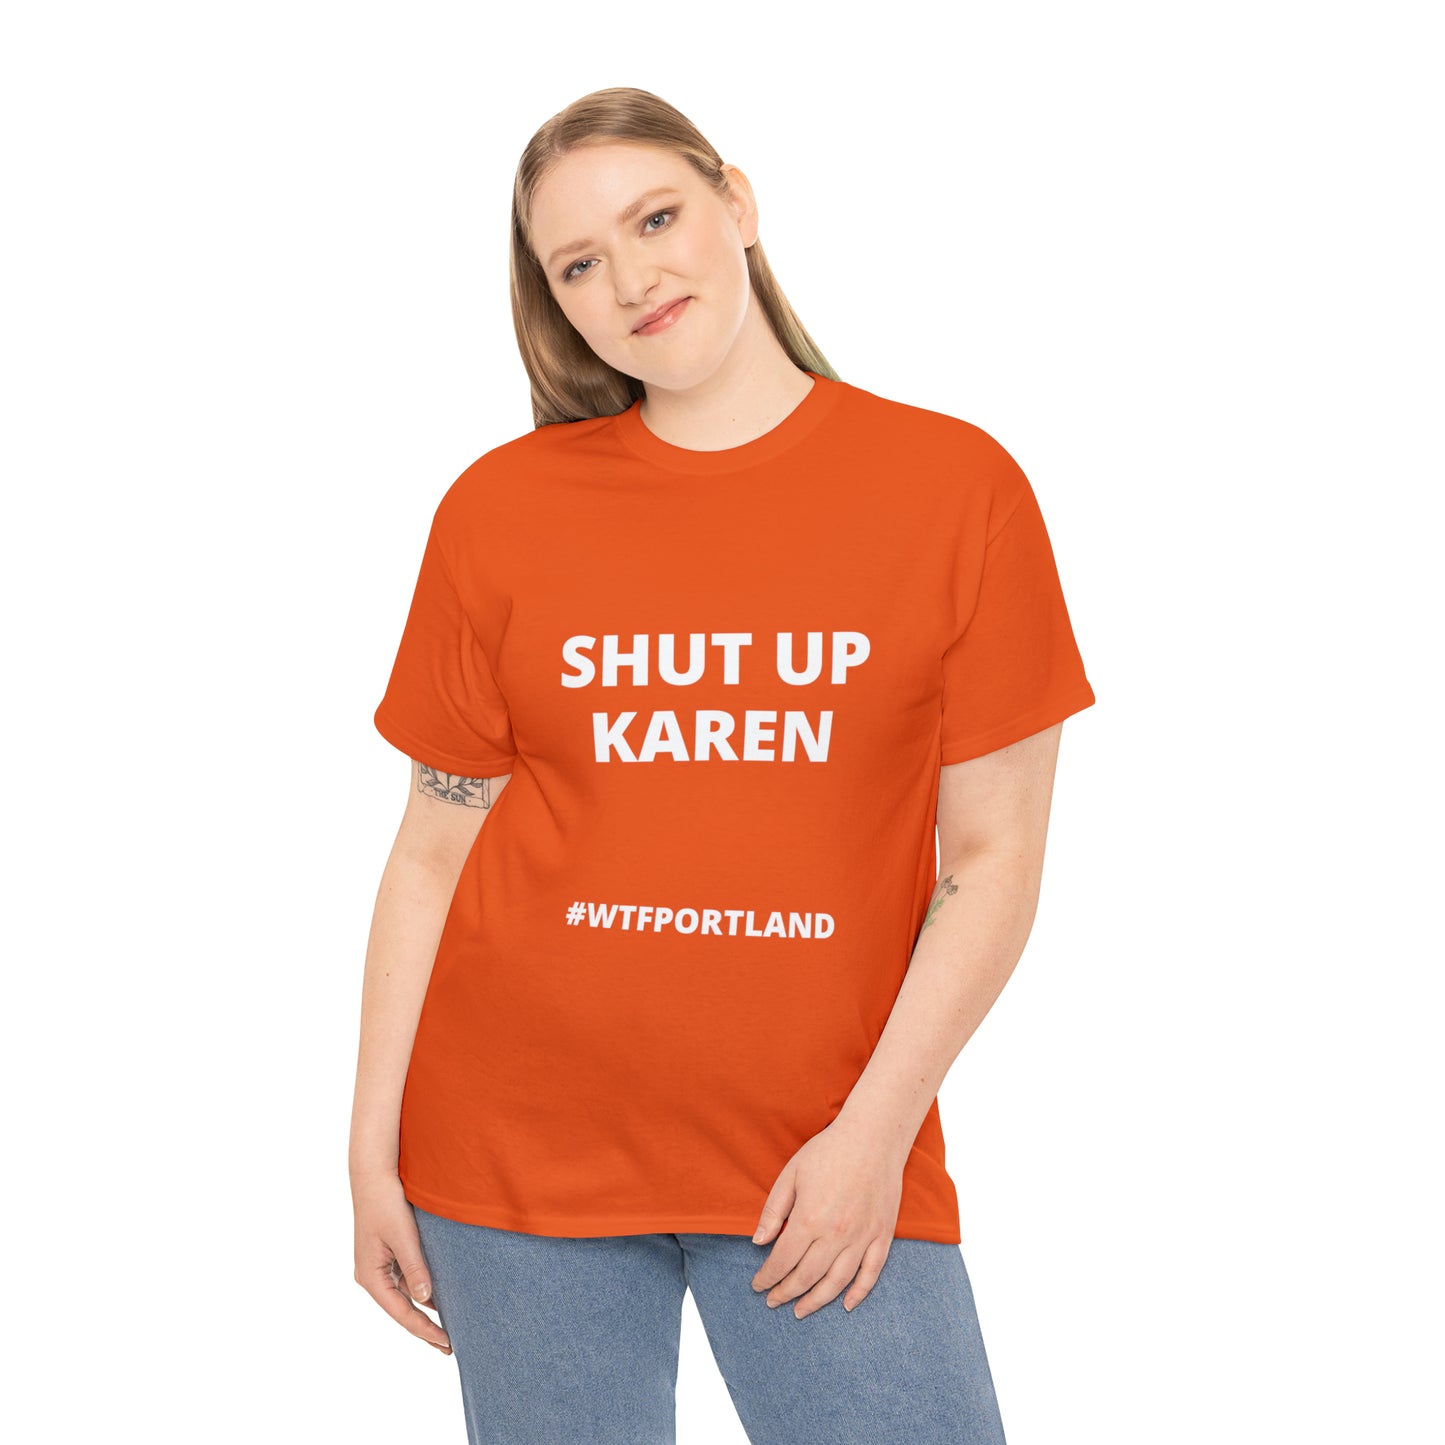 WTF PORTLAND - SHUT UP KAREN